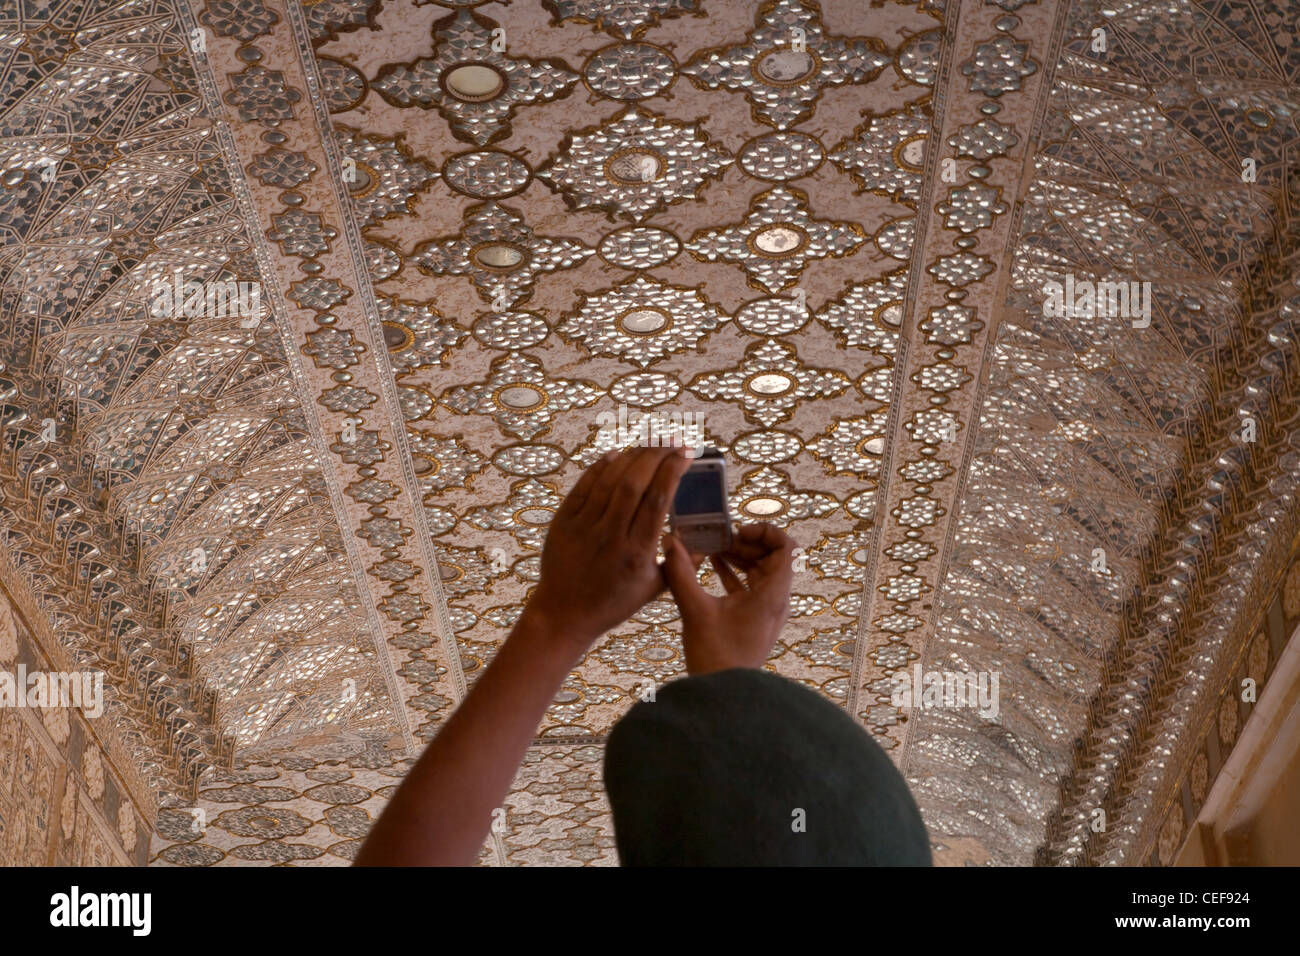 Western traveler photographing ornate arcade decorated with tileworks inside Amber Palace, Jaipur, Rajasthan, India Stock Photo